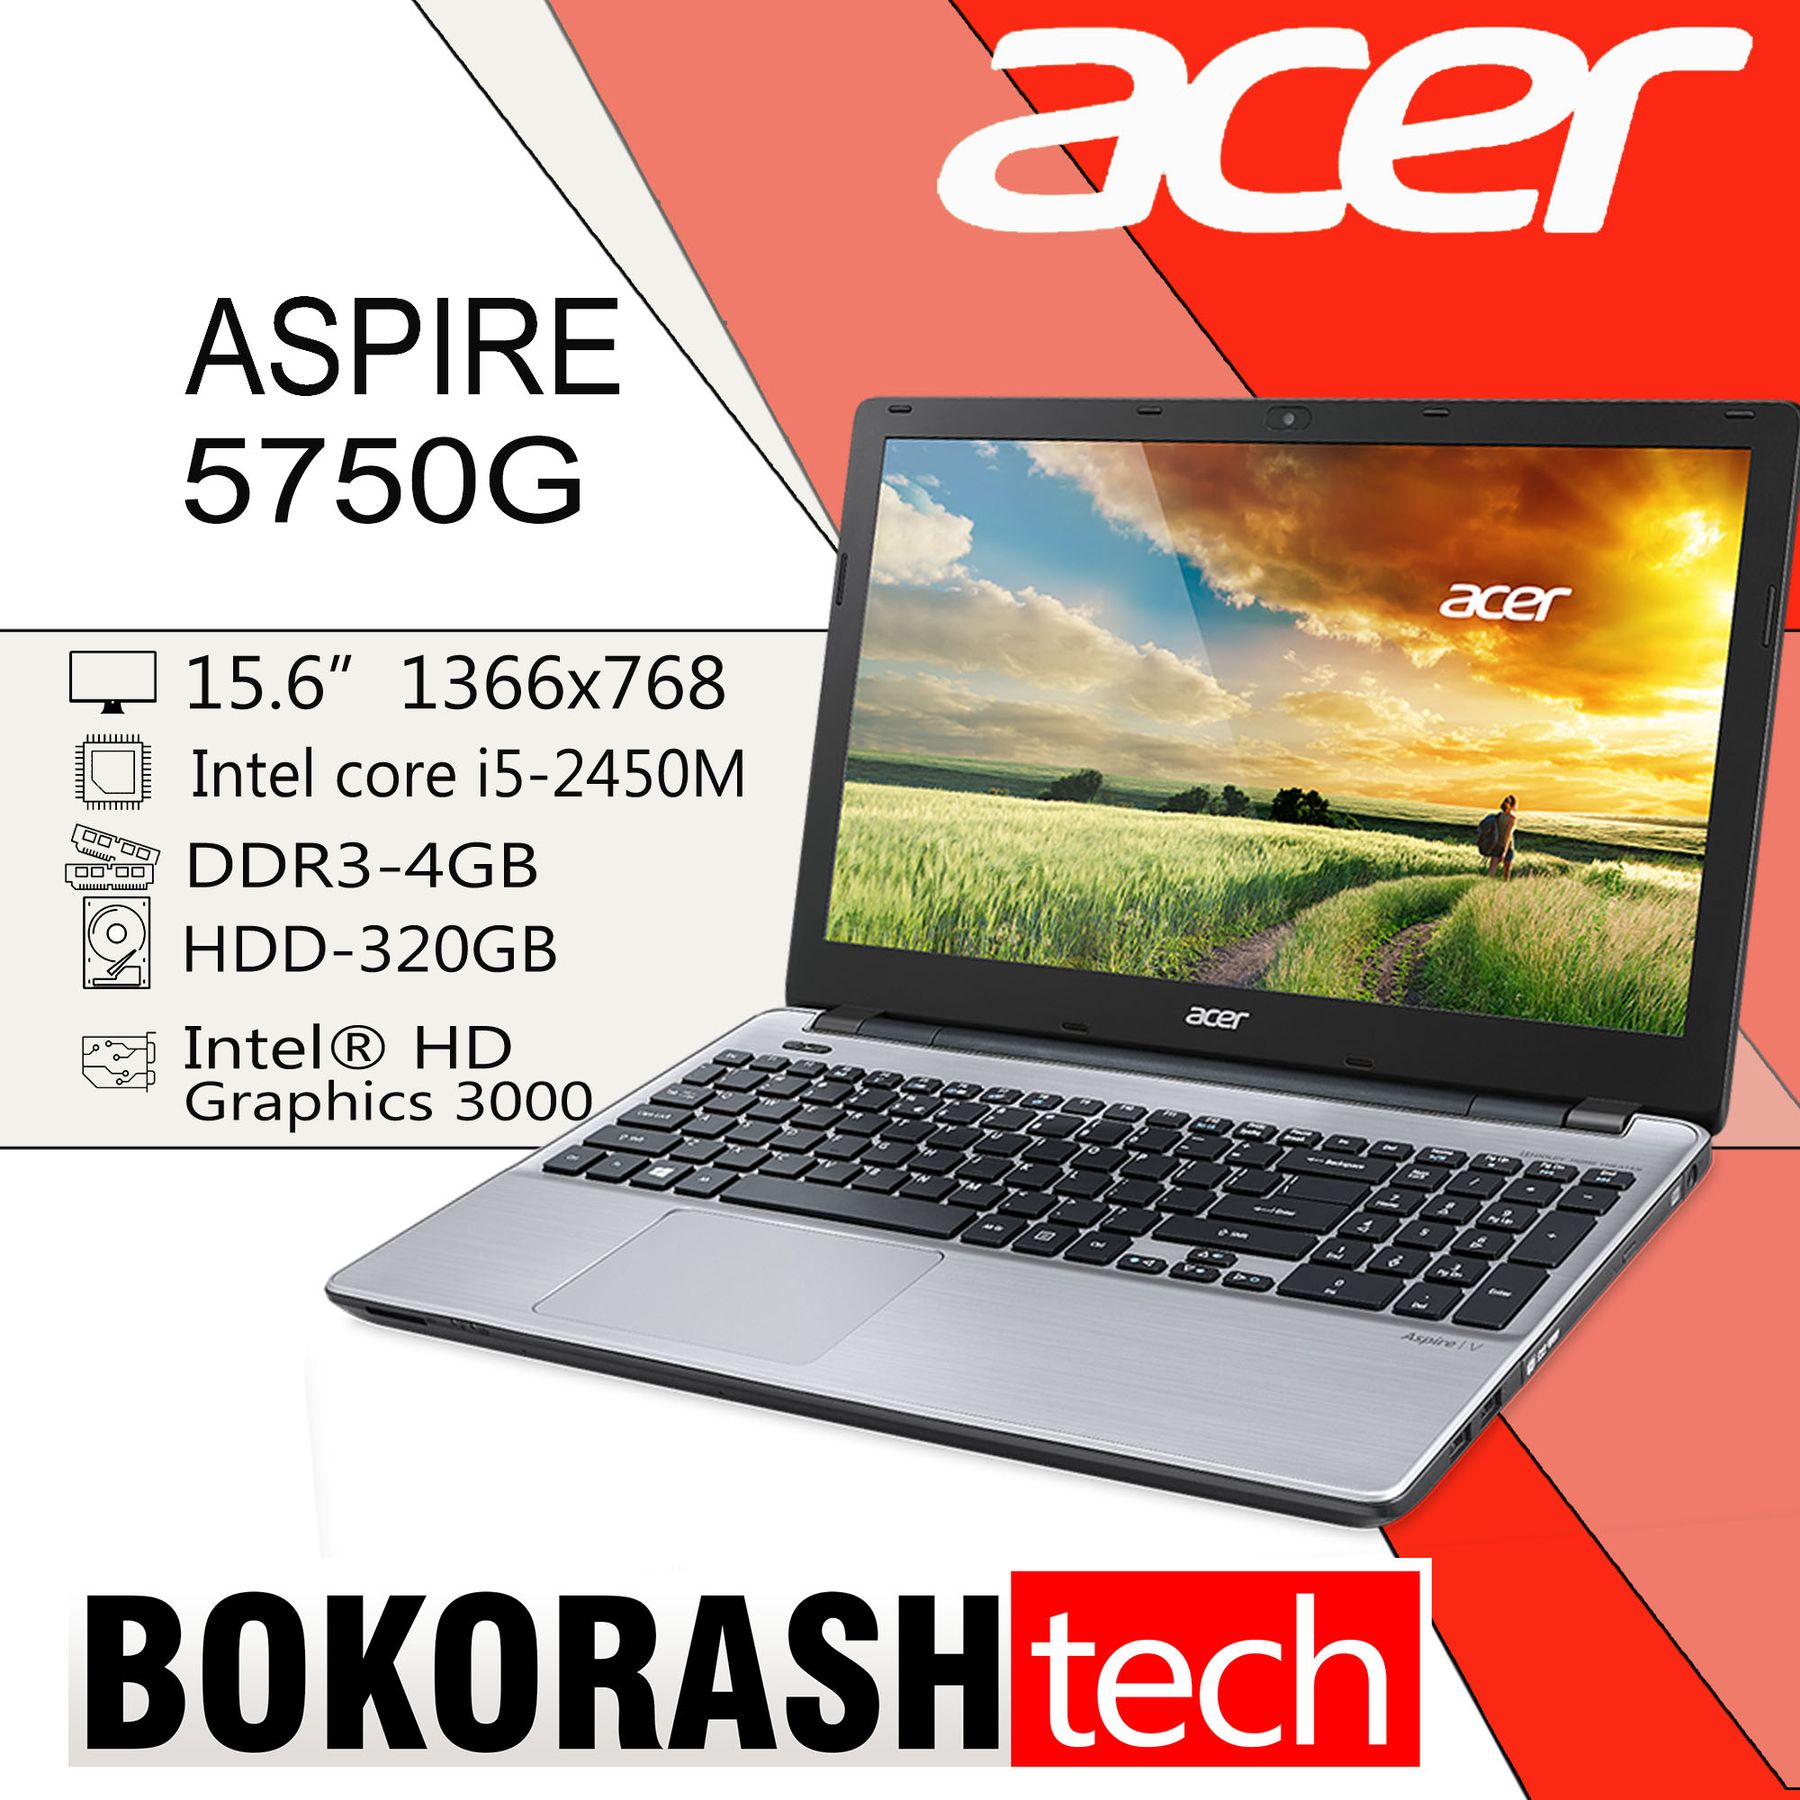 Intel core i5 ноутбук отзывы. Acer Aspire 5750g i5 2450m. Acer Aspire 5750g i5 2450m характеристики. Acer Aspire 5750g характеристики.